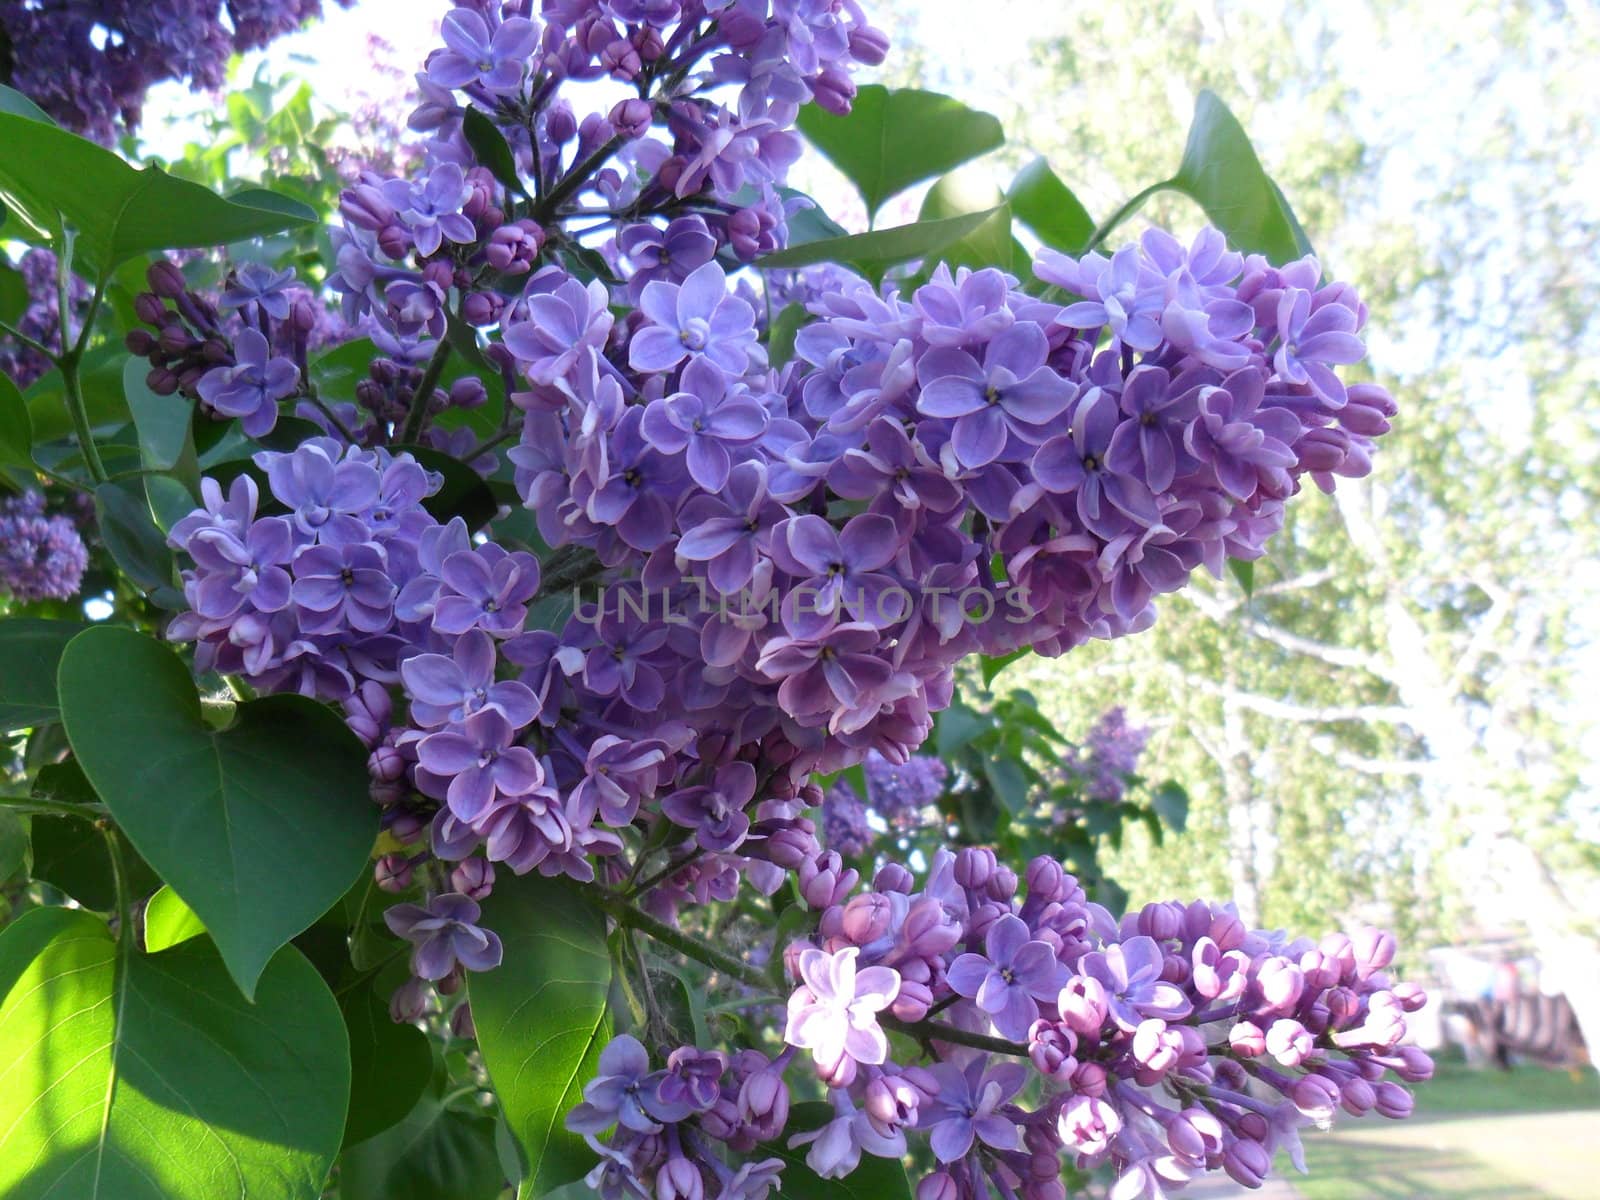 Lilac by vlad00mir